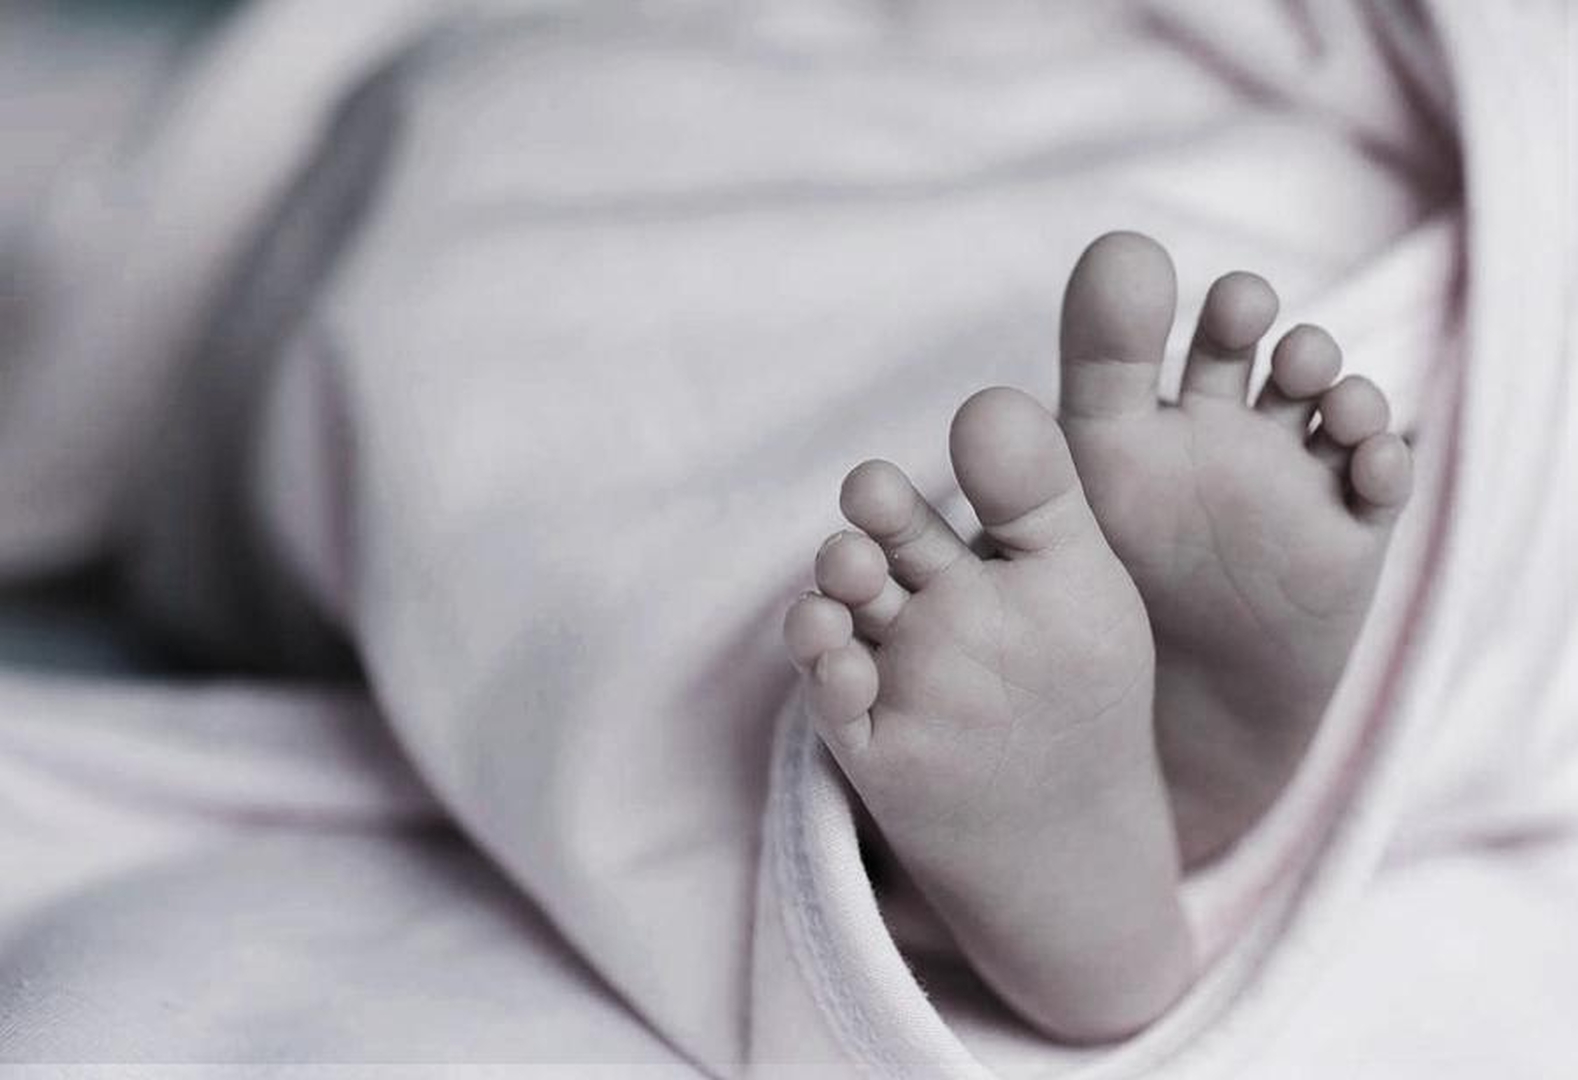 Costa Rica: bebé murió en un hospital a causa de varios golpes